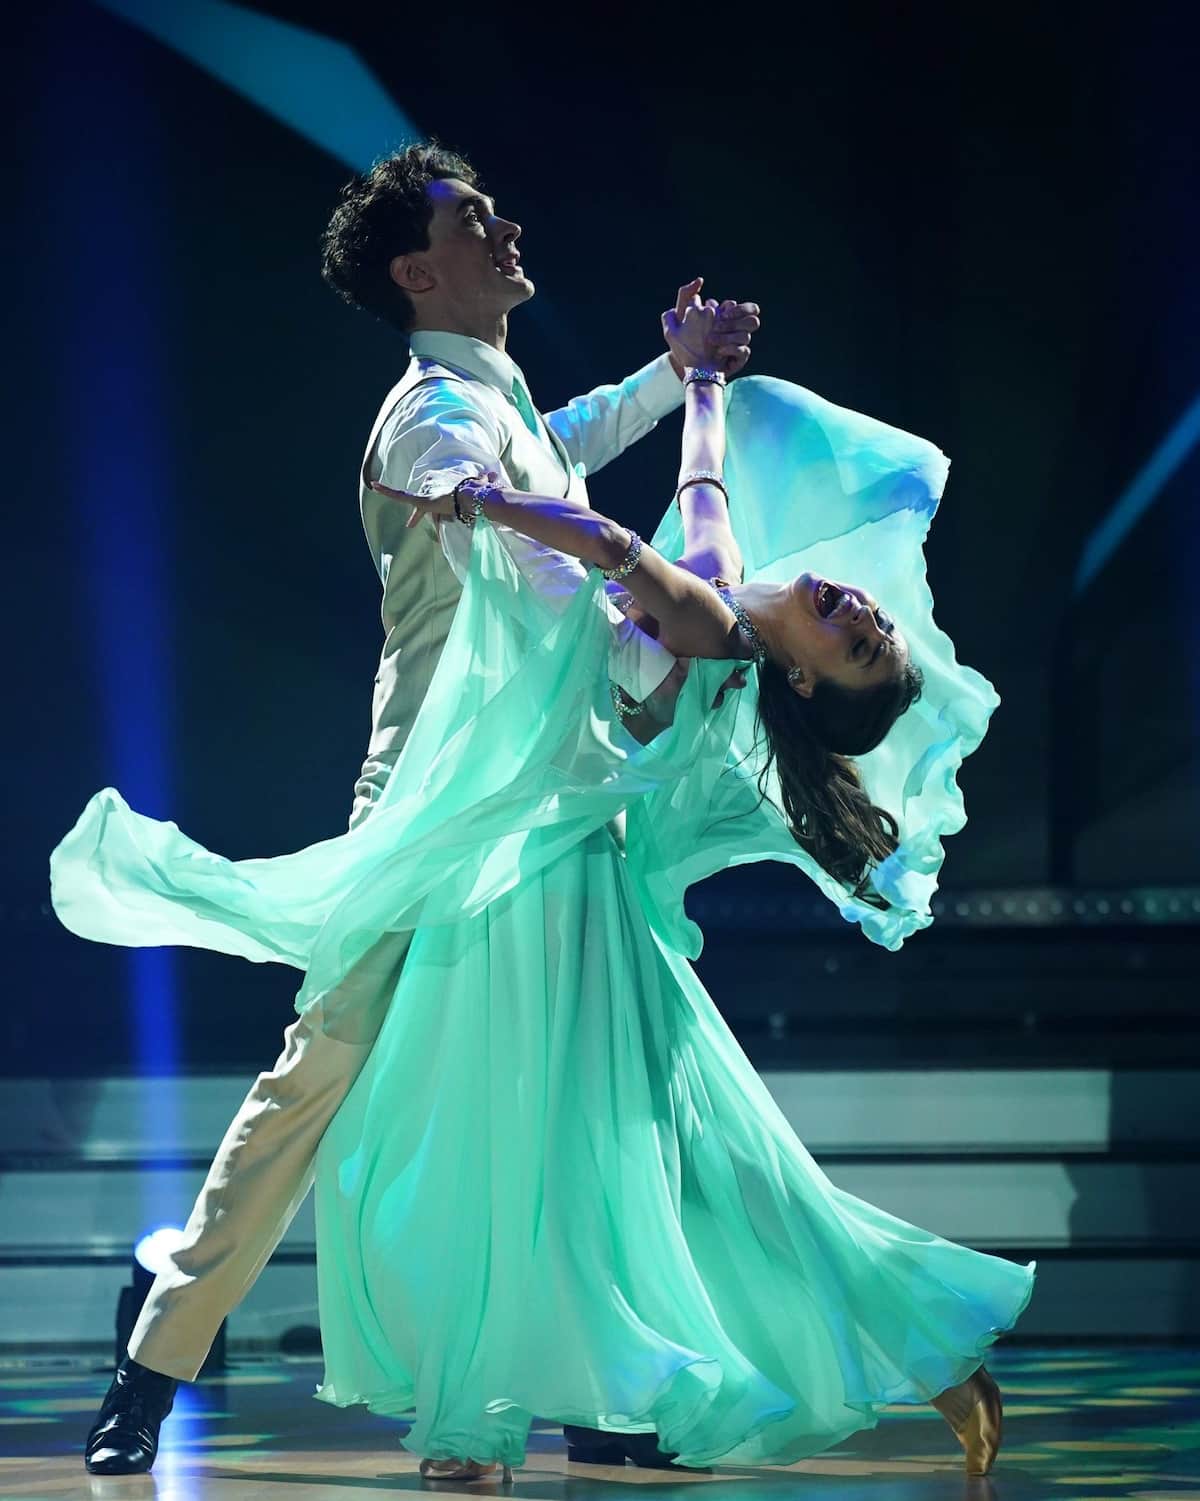 Timon Krause und Ekaterina Leonova mit dem Salsango Tanz des Abends bei Let's dance am 24.2.2023